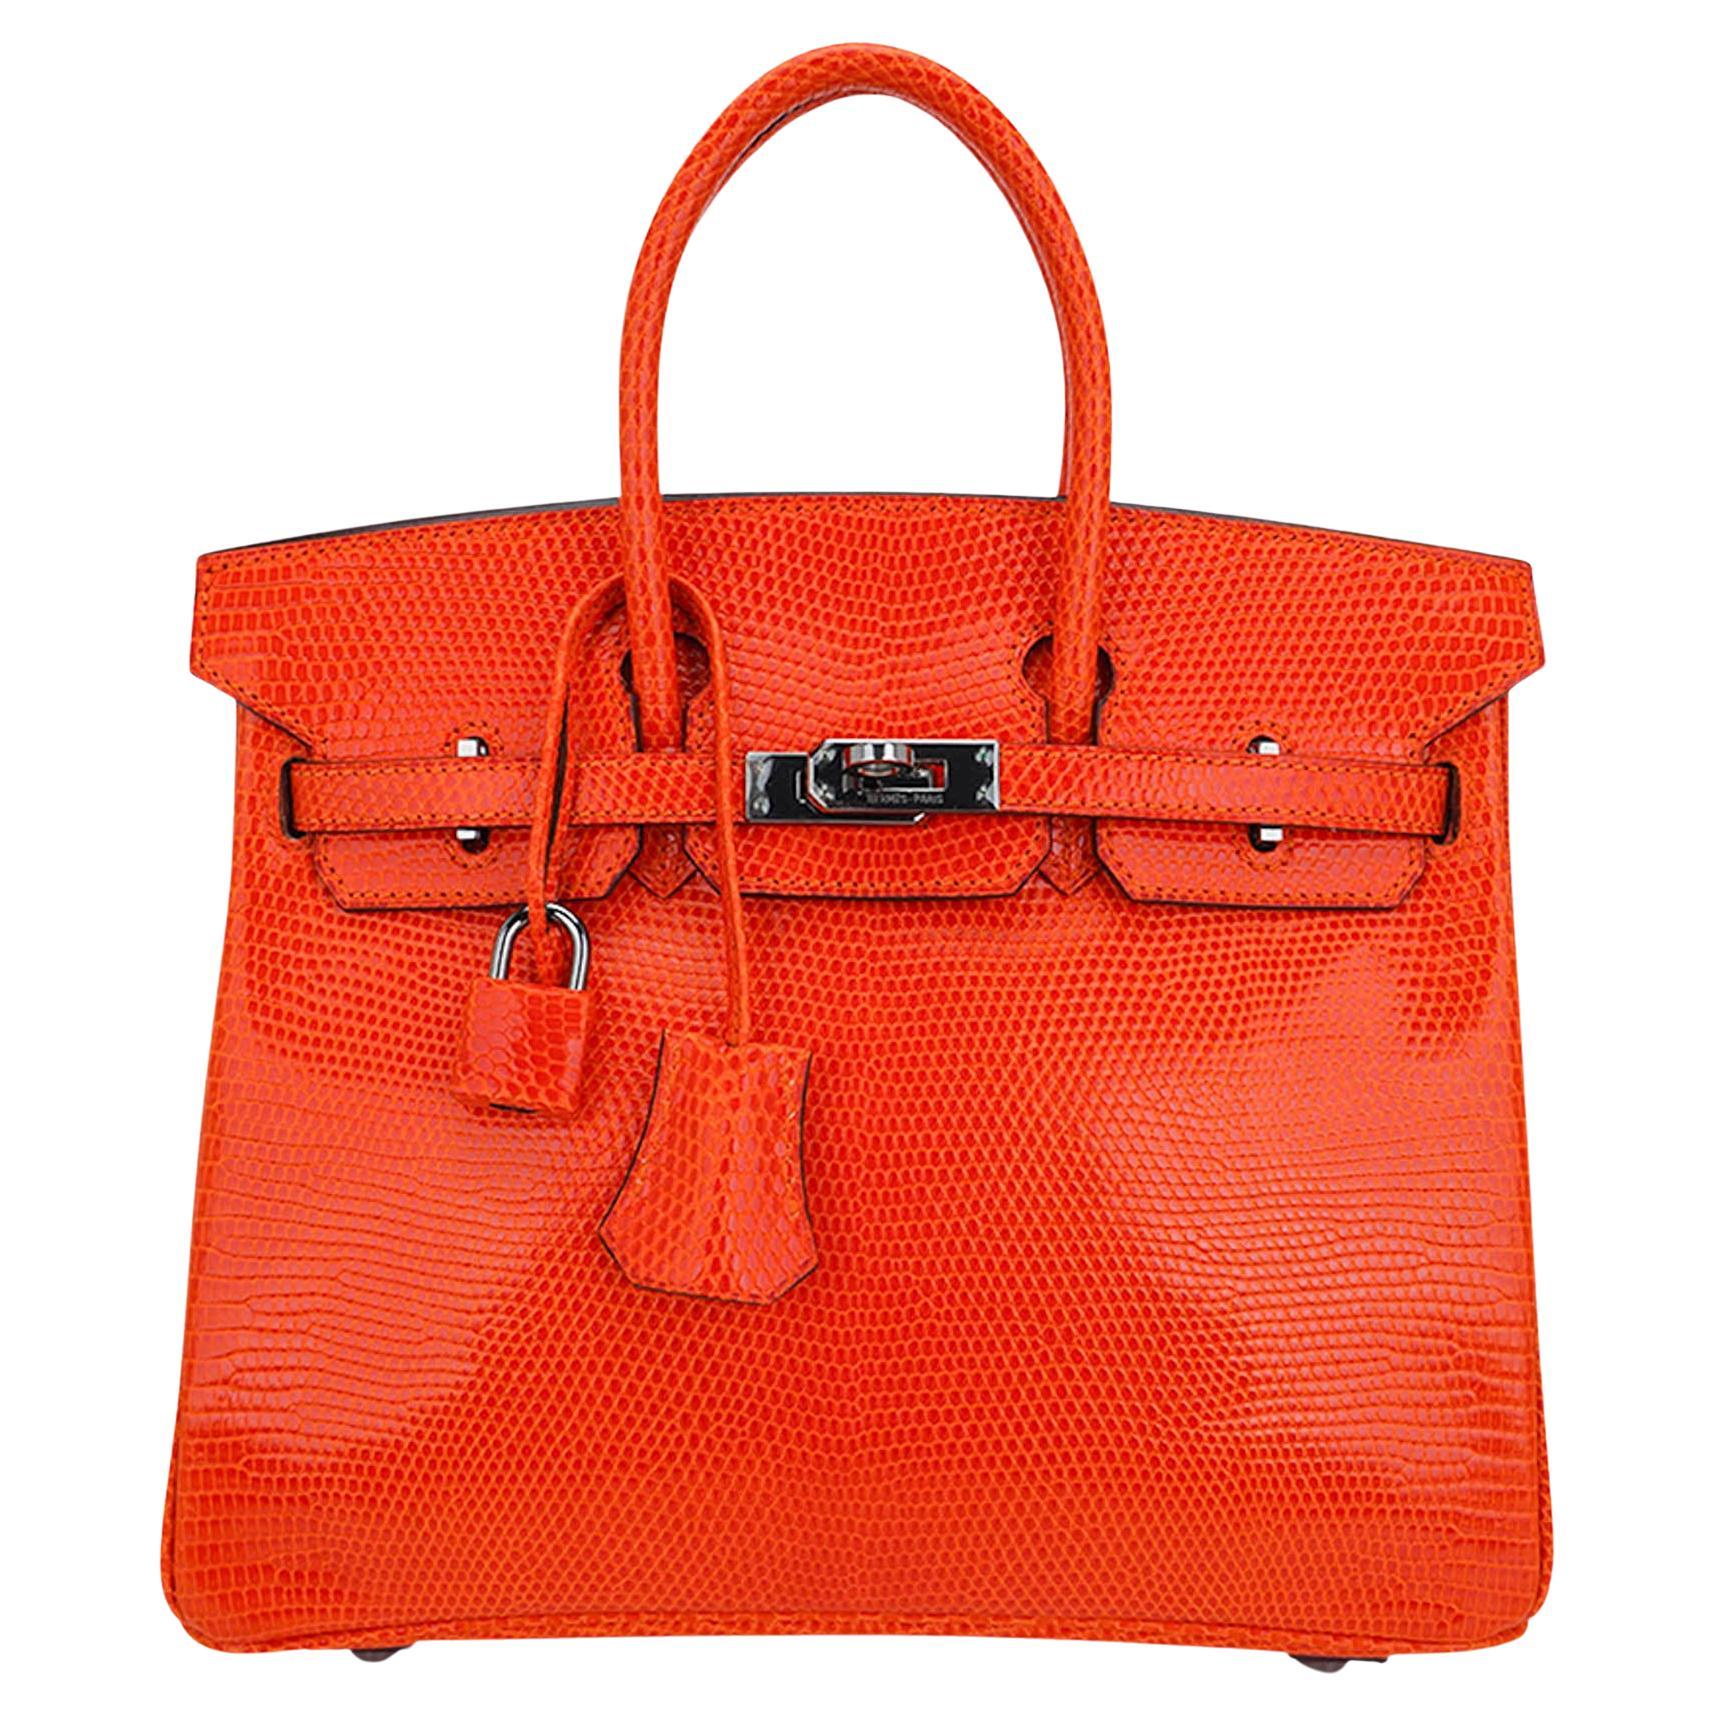 Hermes Birkin 25 Orange Tangerine Lizard Limited Edition Bag Ruthenium Hardware For Sale